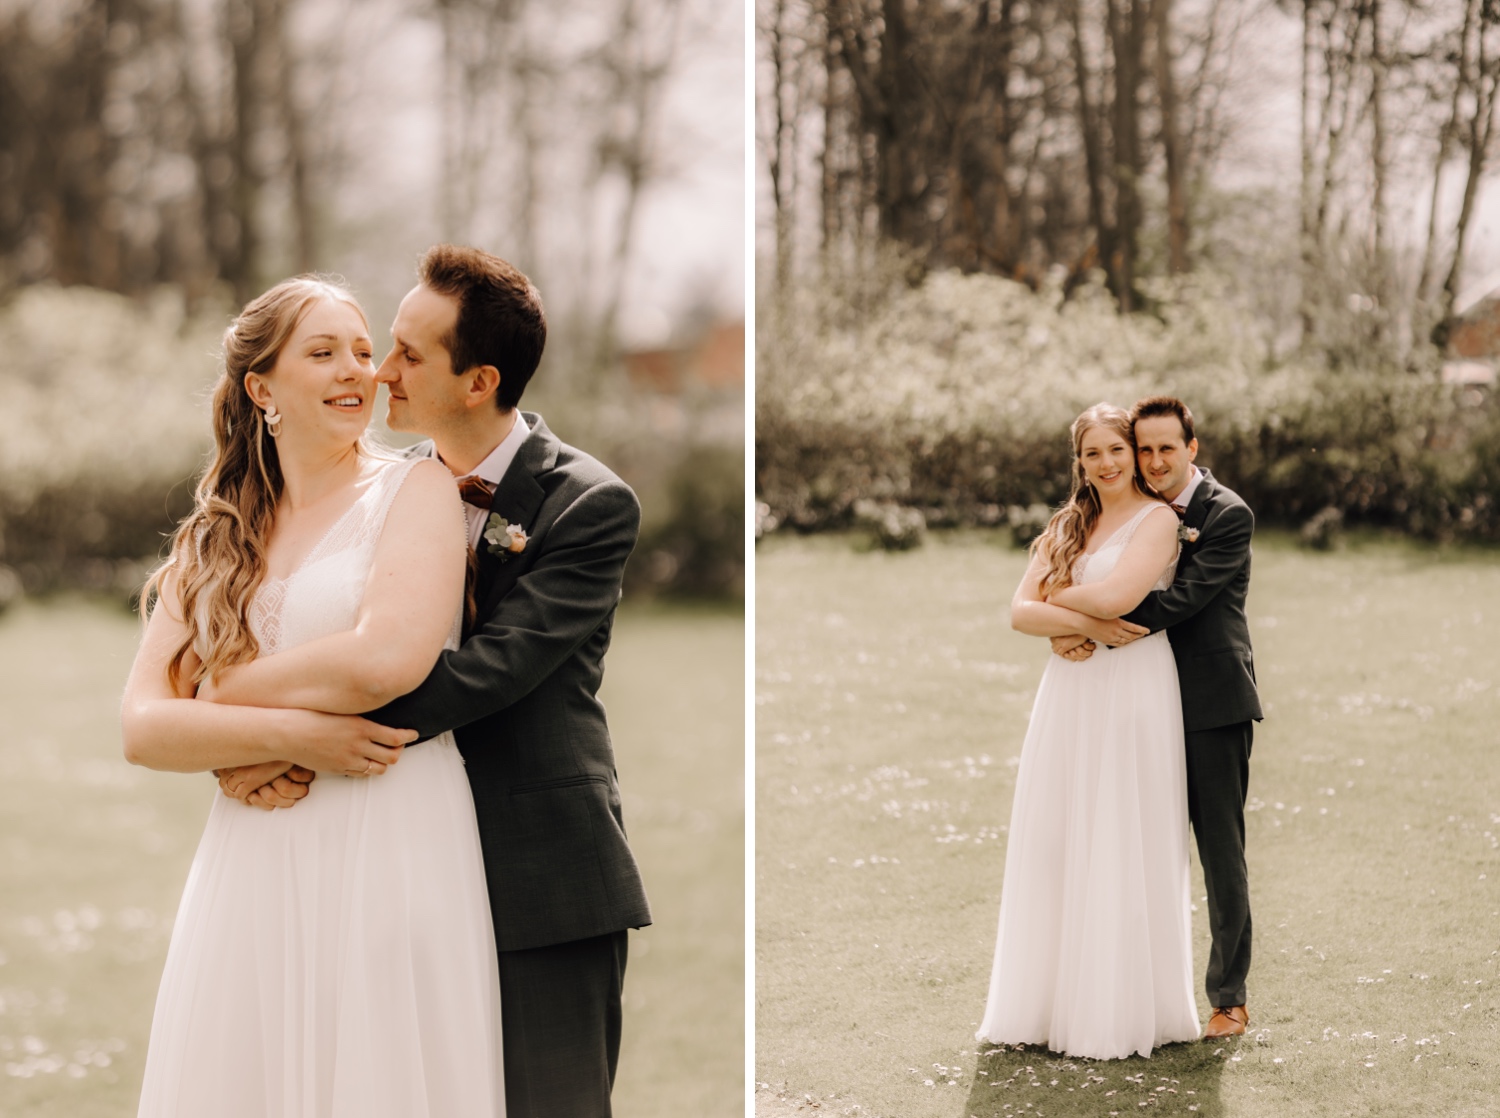 Huwelijksfotograaf Limburg - bruidspaar knuffelt elkaar innig